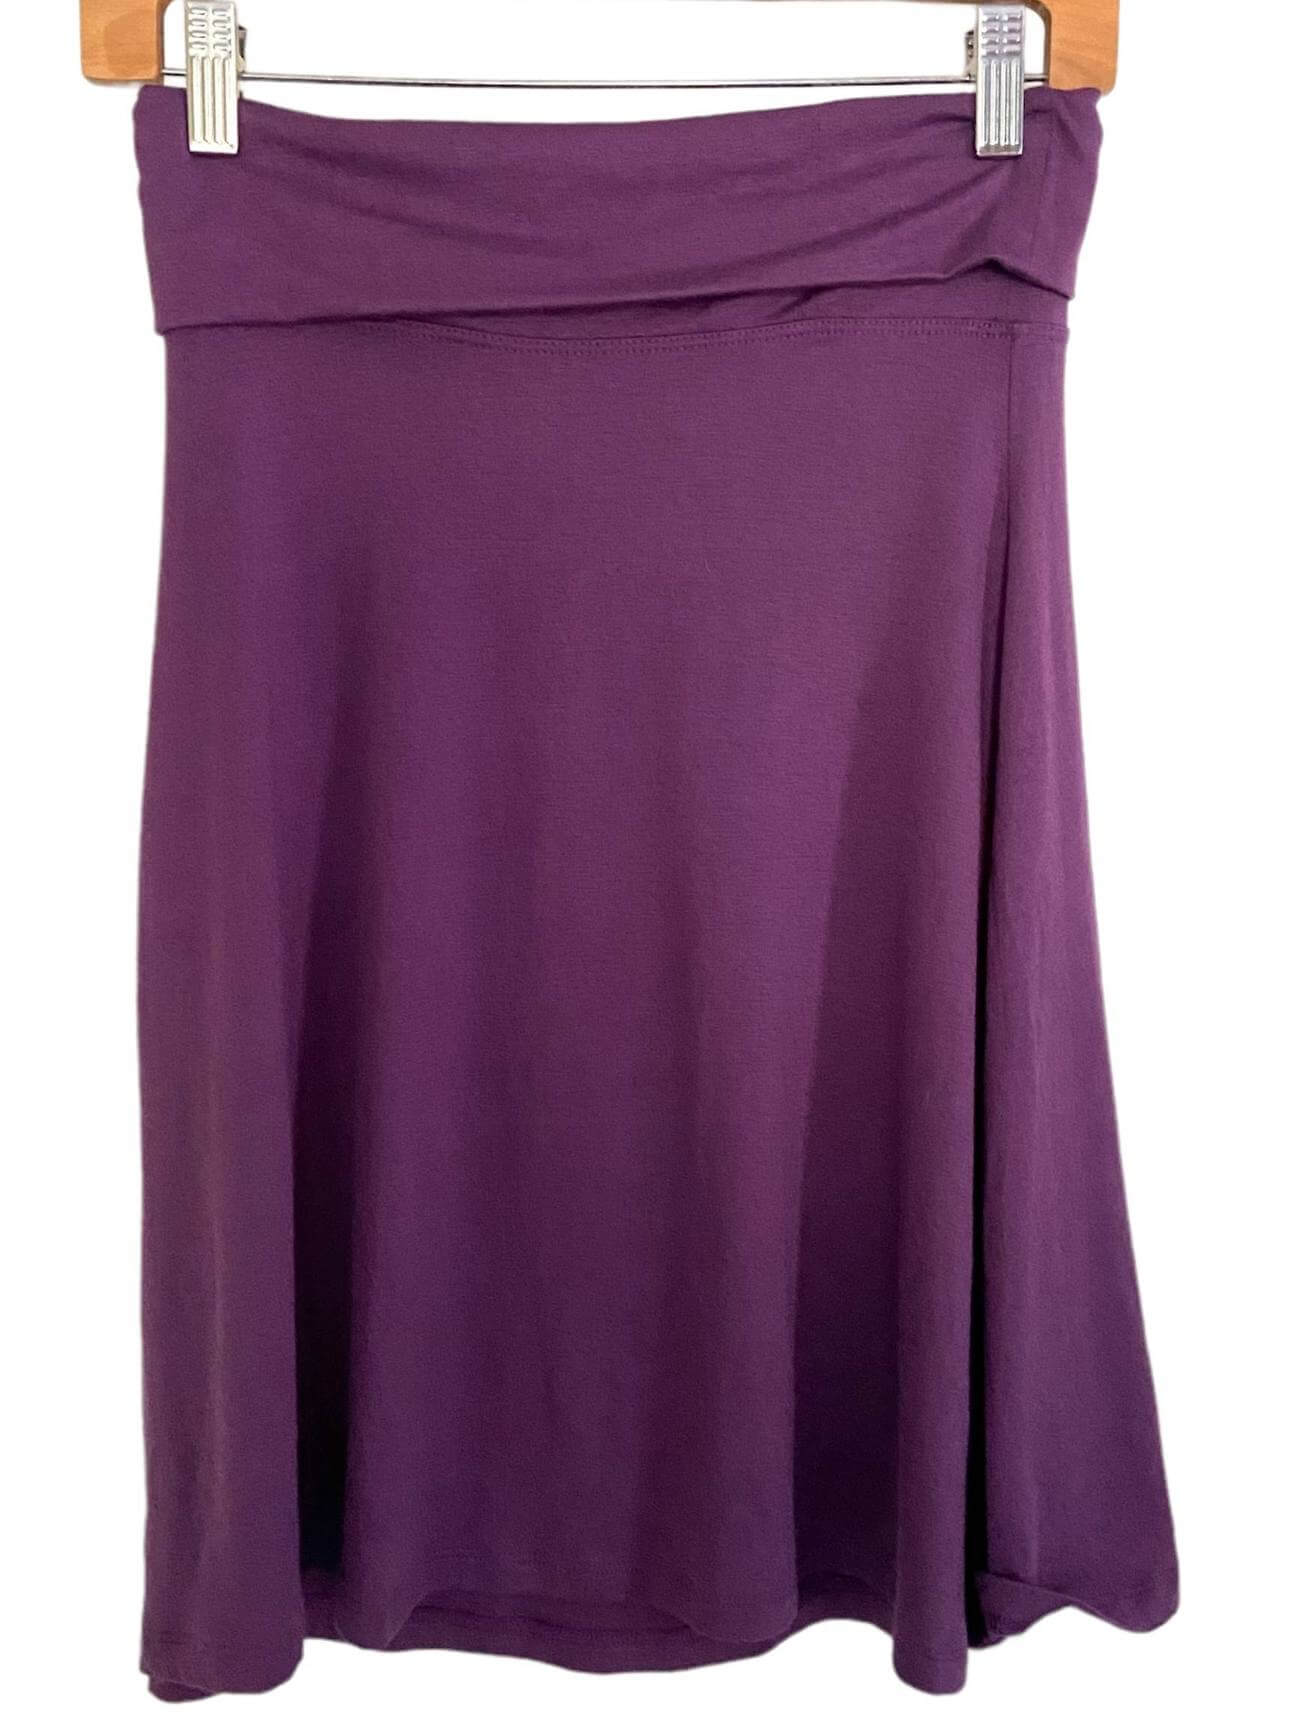 Dark Winter OLD NAVY purple knit swing skirt